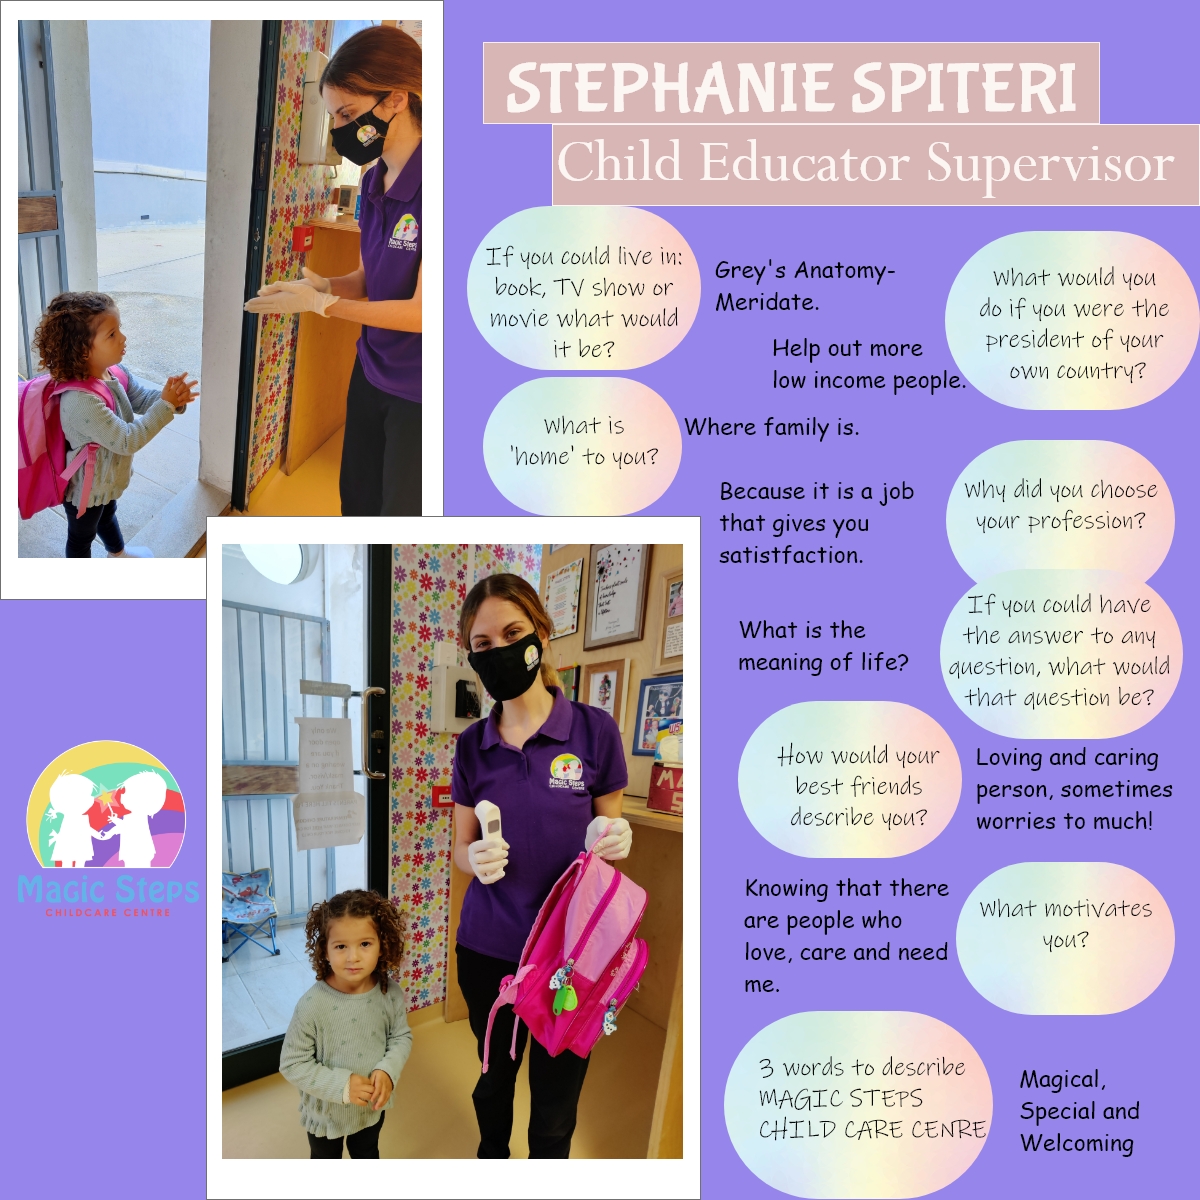 Meet Stephanie-Child Educator Supervisor